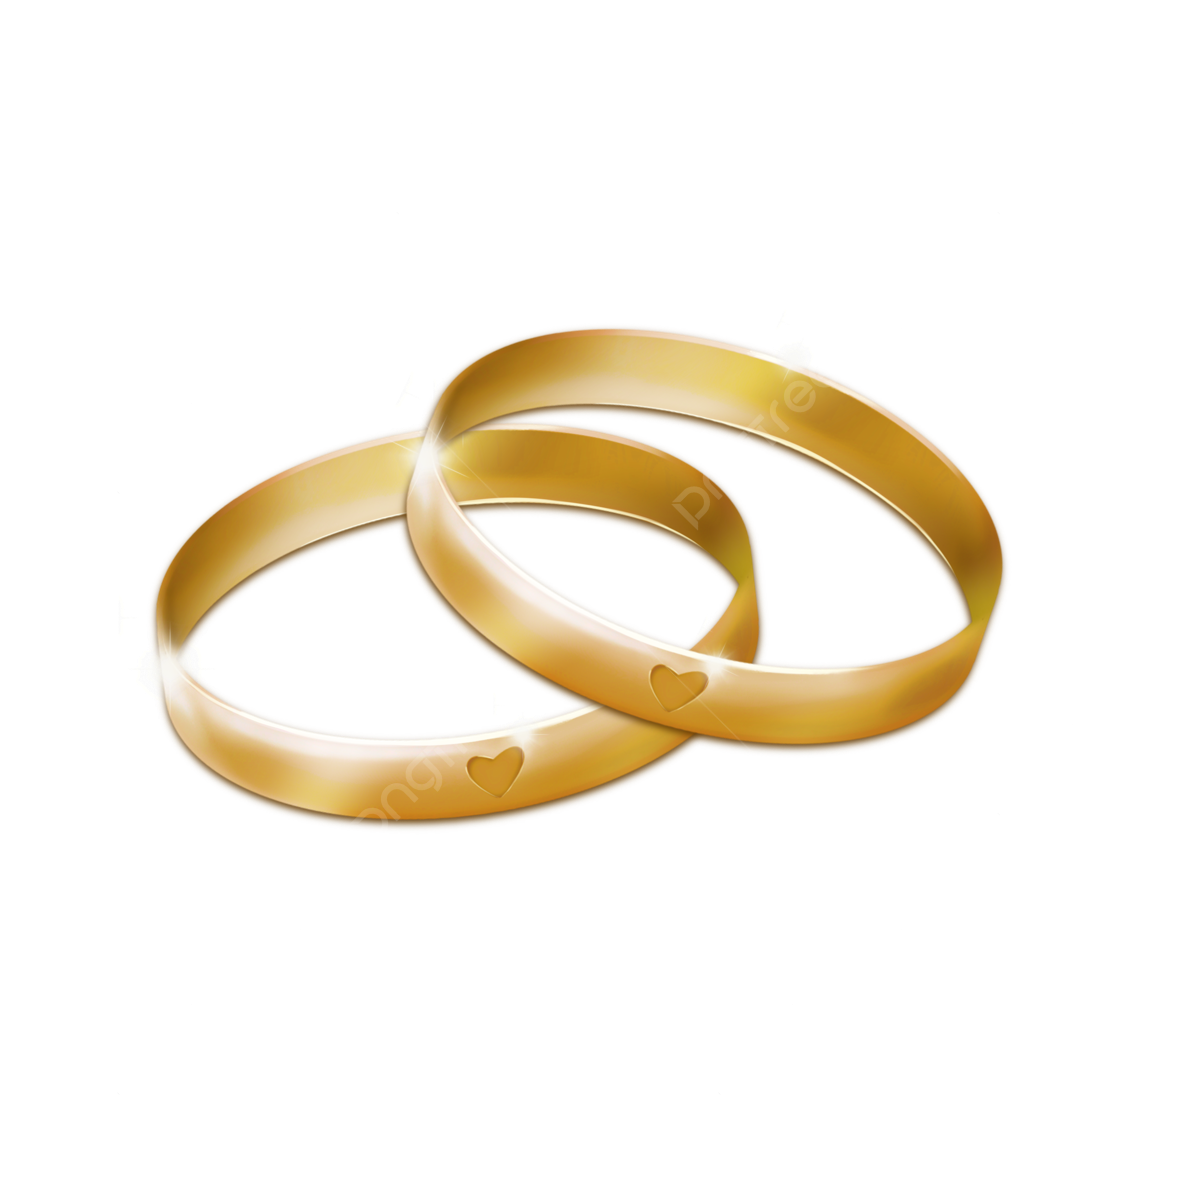 Rings Clipart PNG Images, Ring, Rings Clipart, Golden, Gold PNG Image For  Free Download | Desenho de alianças, Anel de noivado, Ilustração de  casamento